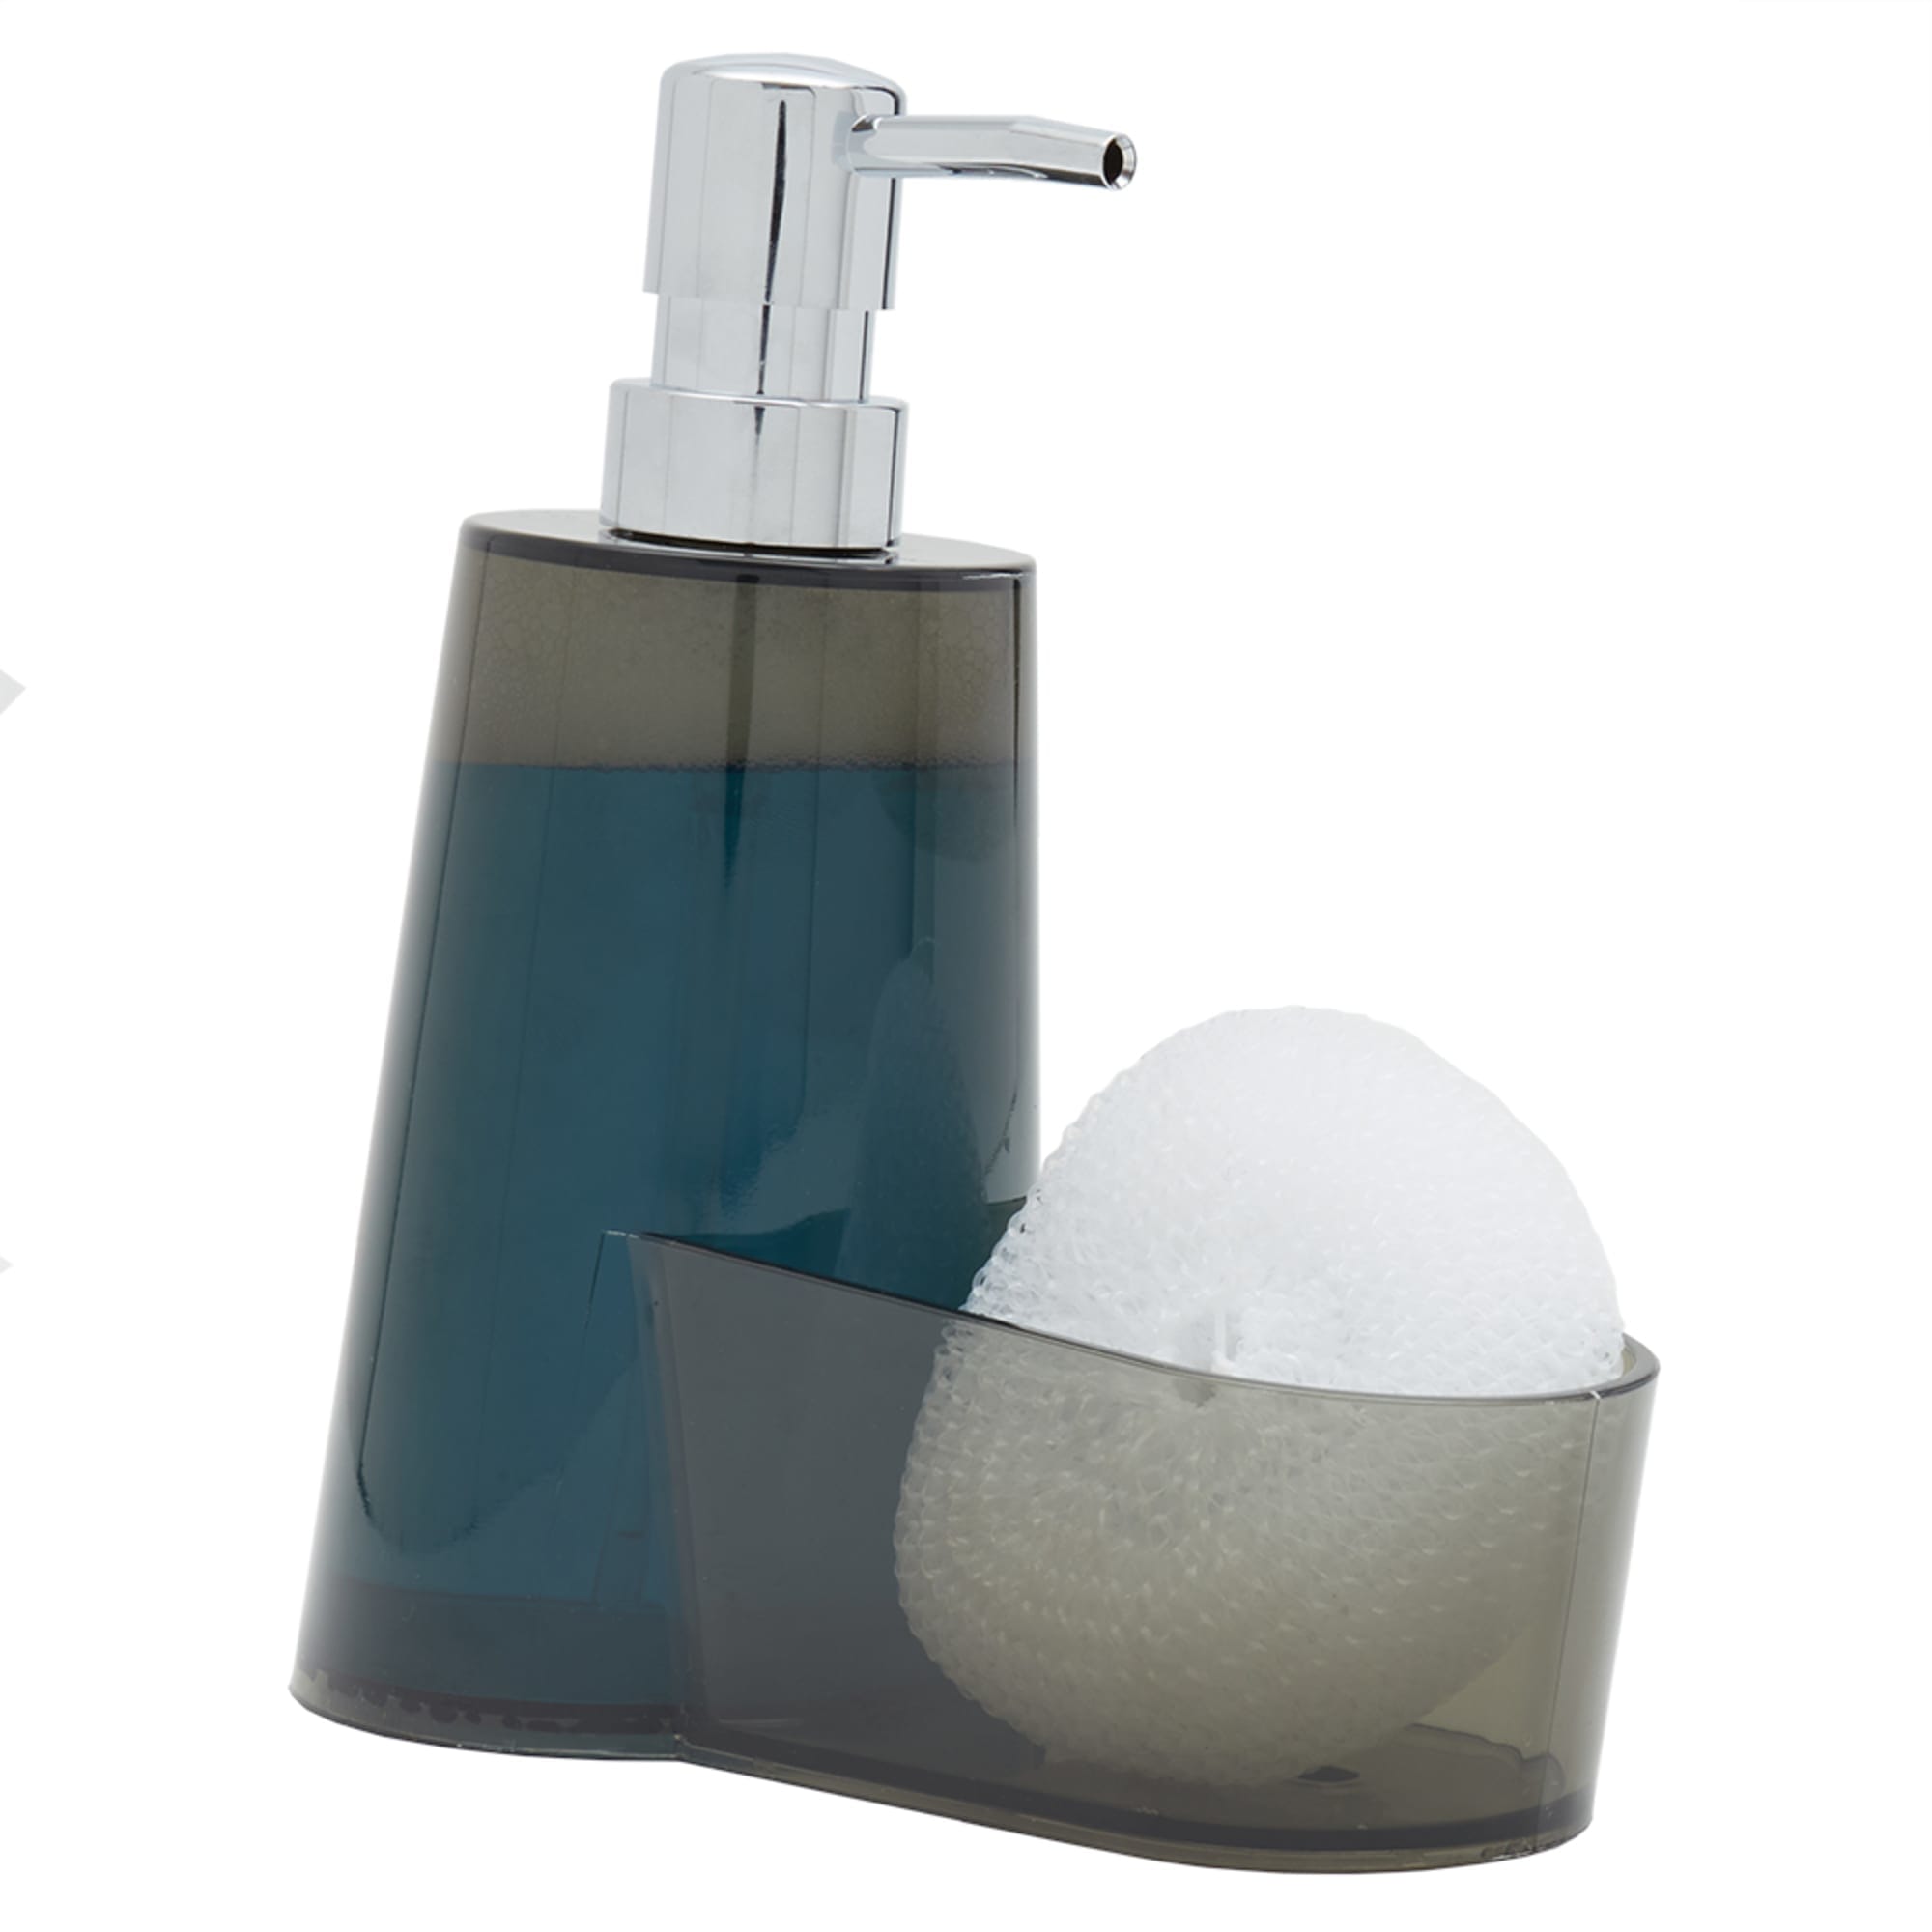 Home Basics 13.5 oz. Plastic Soap Dispenser with Sponge Compartment, Grey $4.00 EACH, CASE PACK OF 12